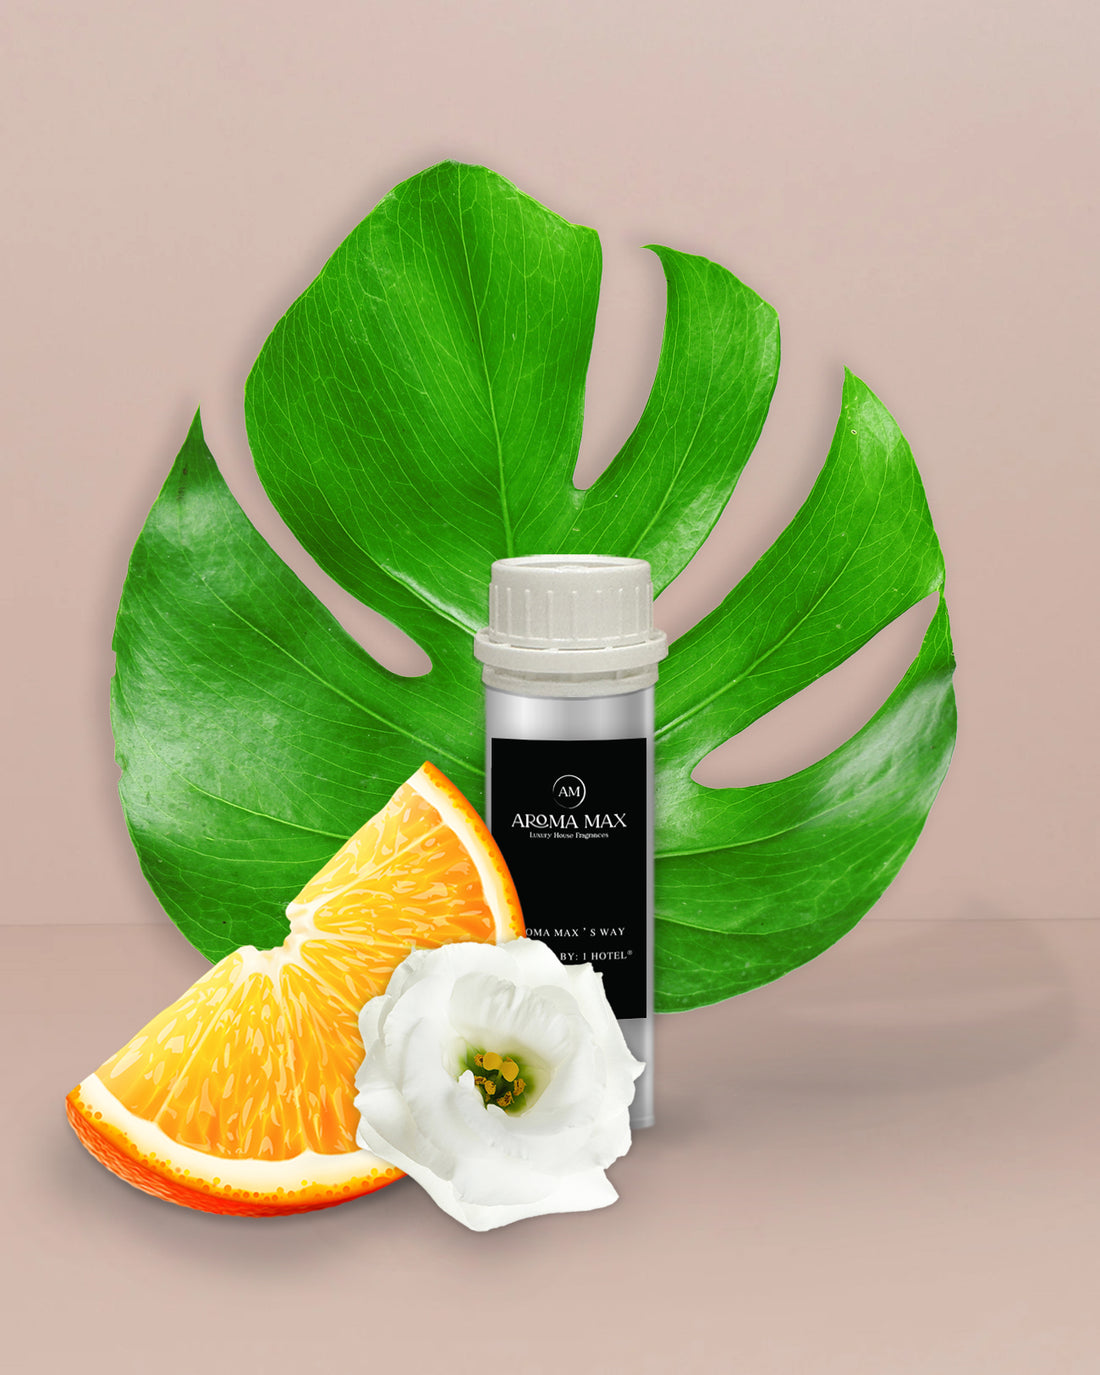 Aroma Max’s Way Inspired by: 1 Hotel® Fragrance Oil. Orange Blossom, Tuberose, & Vanilla